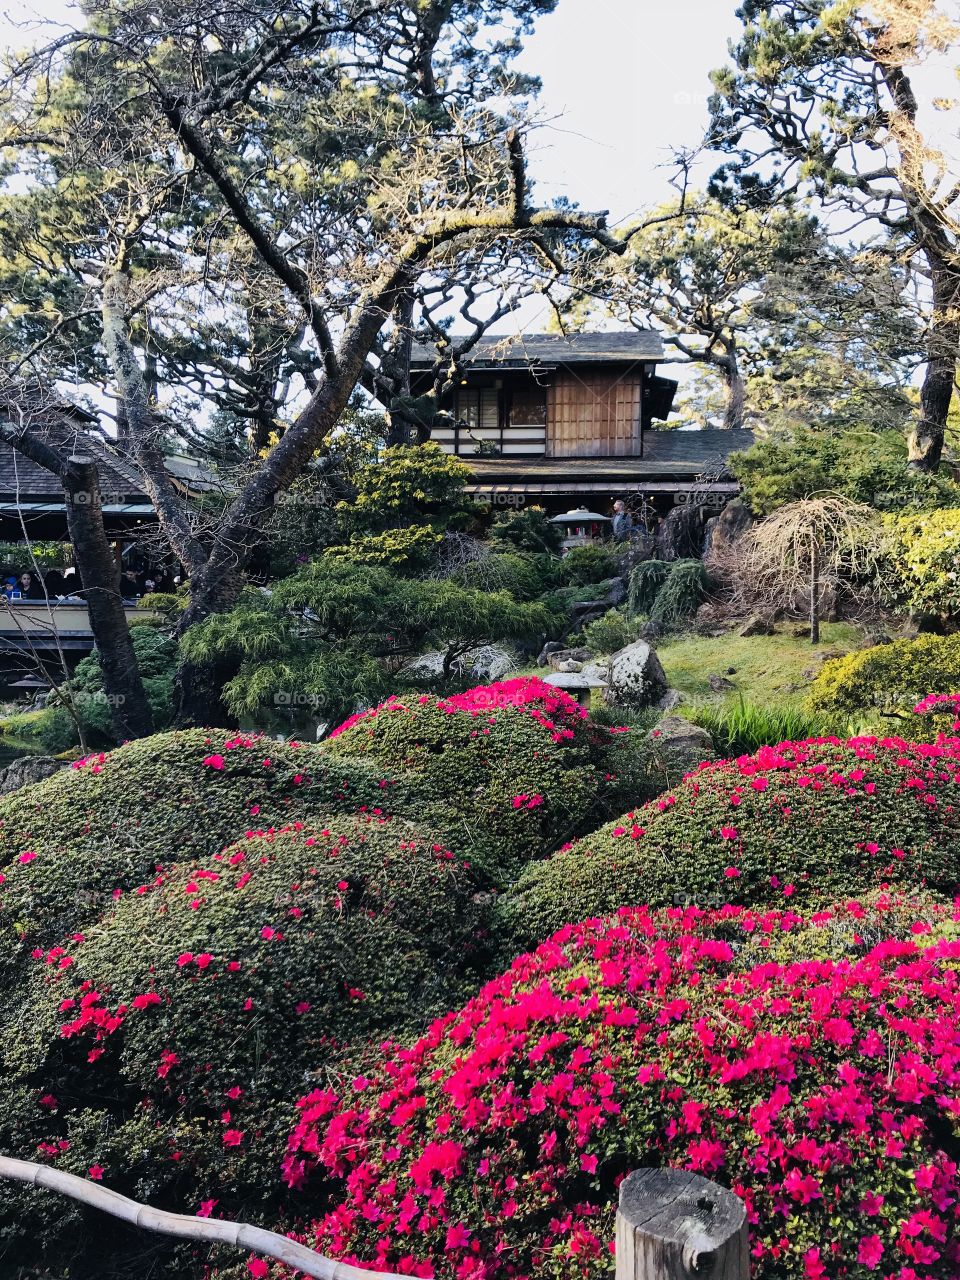 The Japanese tea gardens